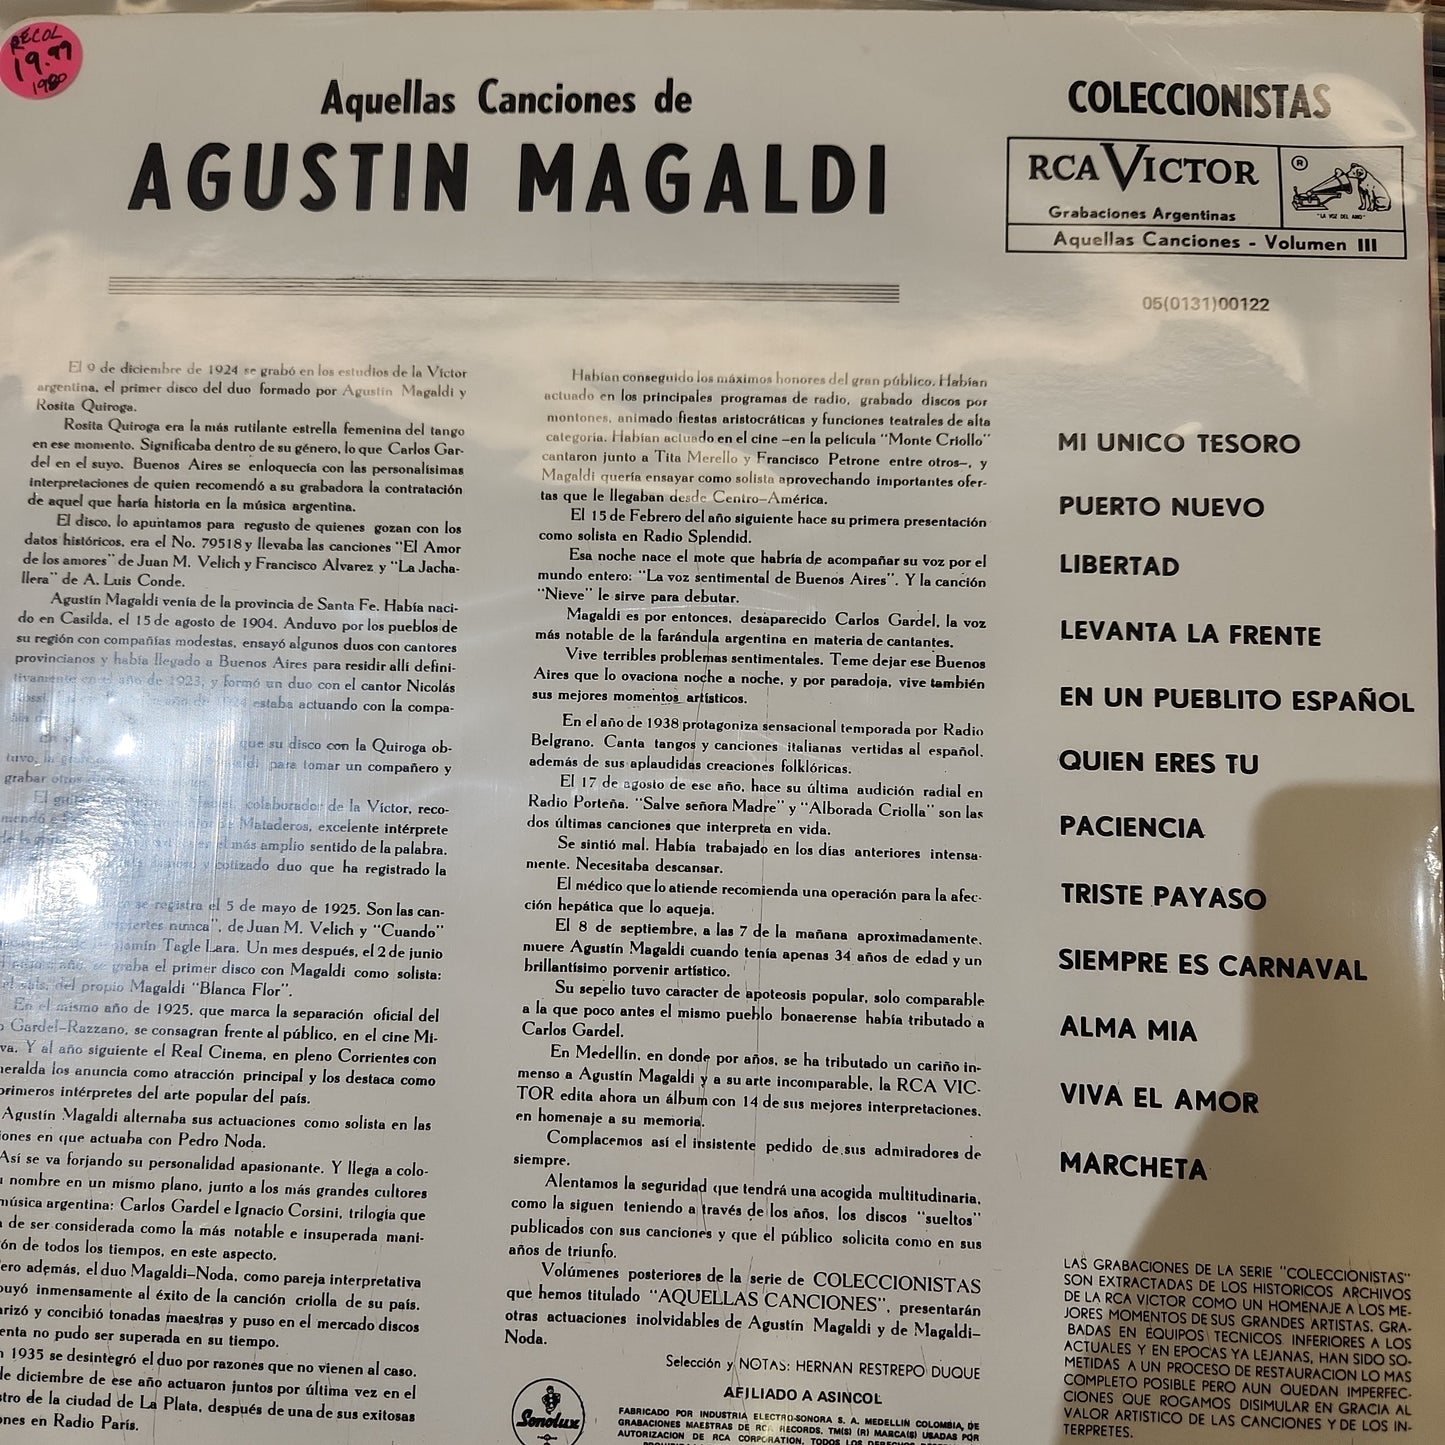 Agustin Magaldi - Coleccionistas